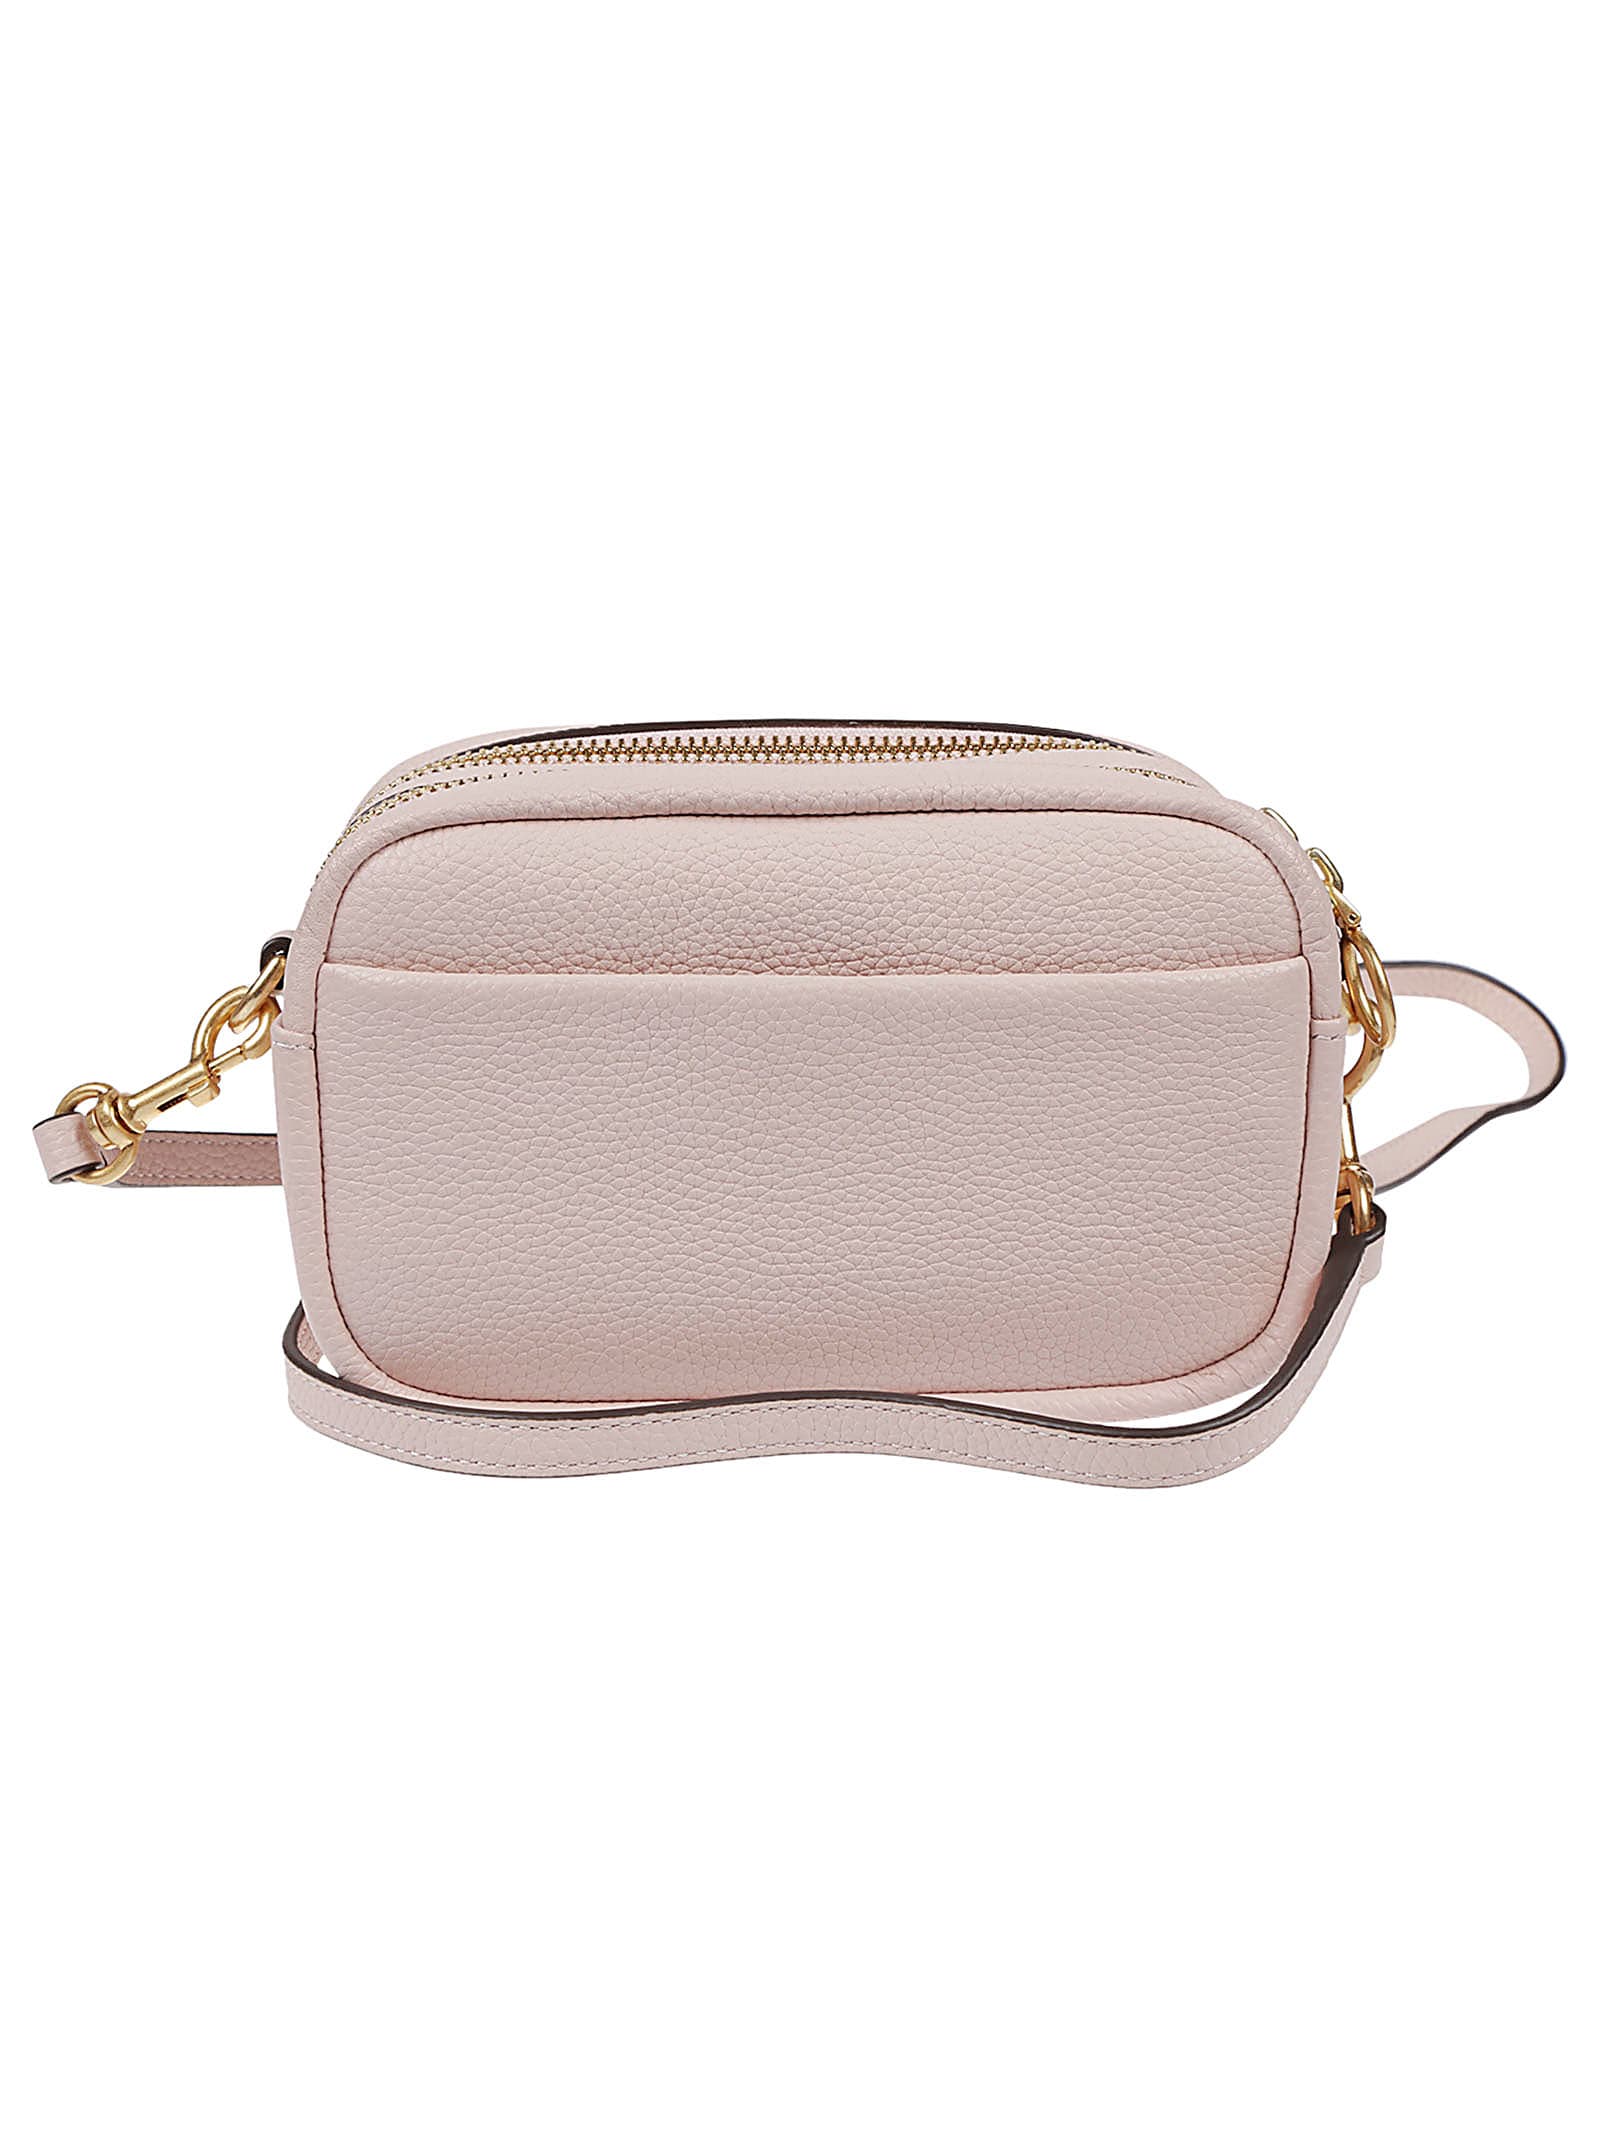 Tory Burch Women's Perry Bombe Mini Bag, Shell Pink, One Size: Handbags